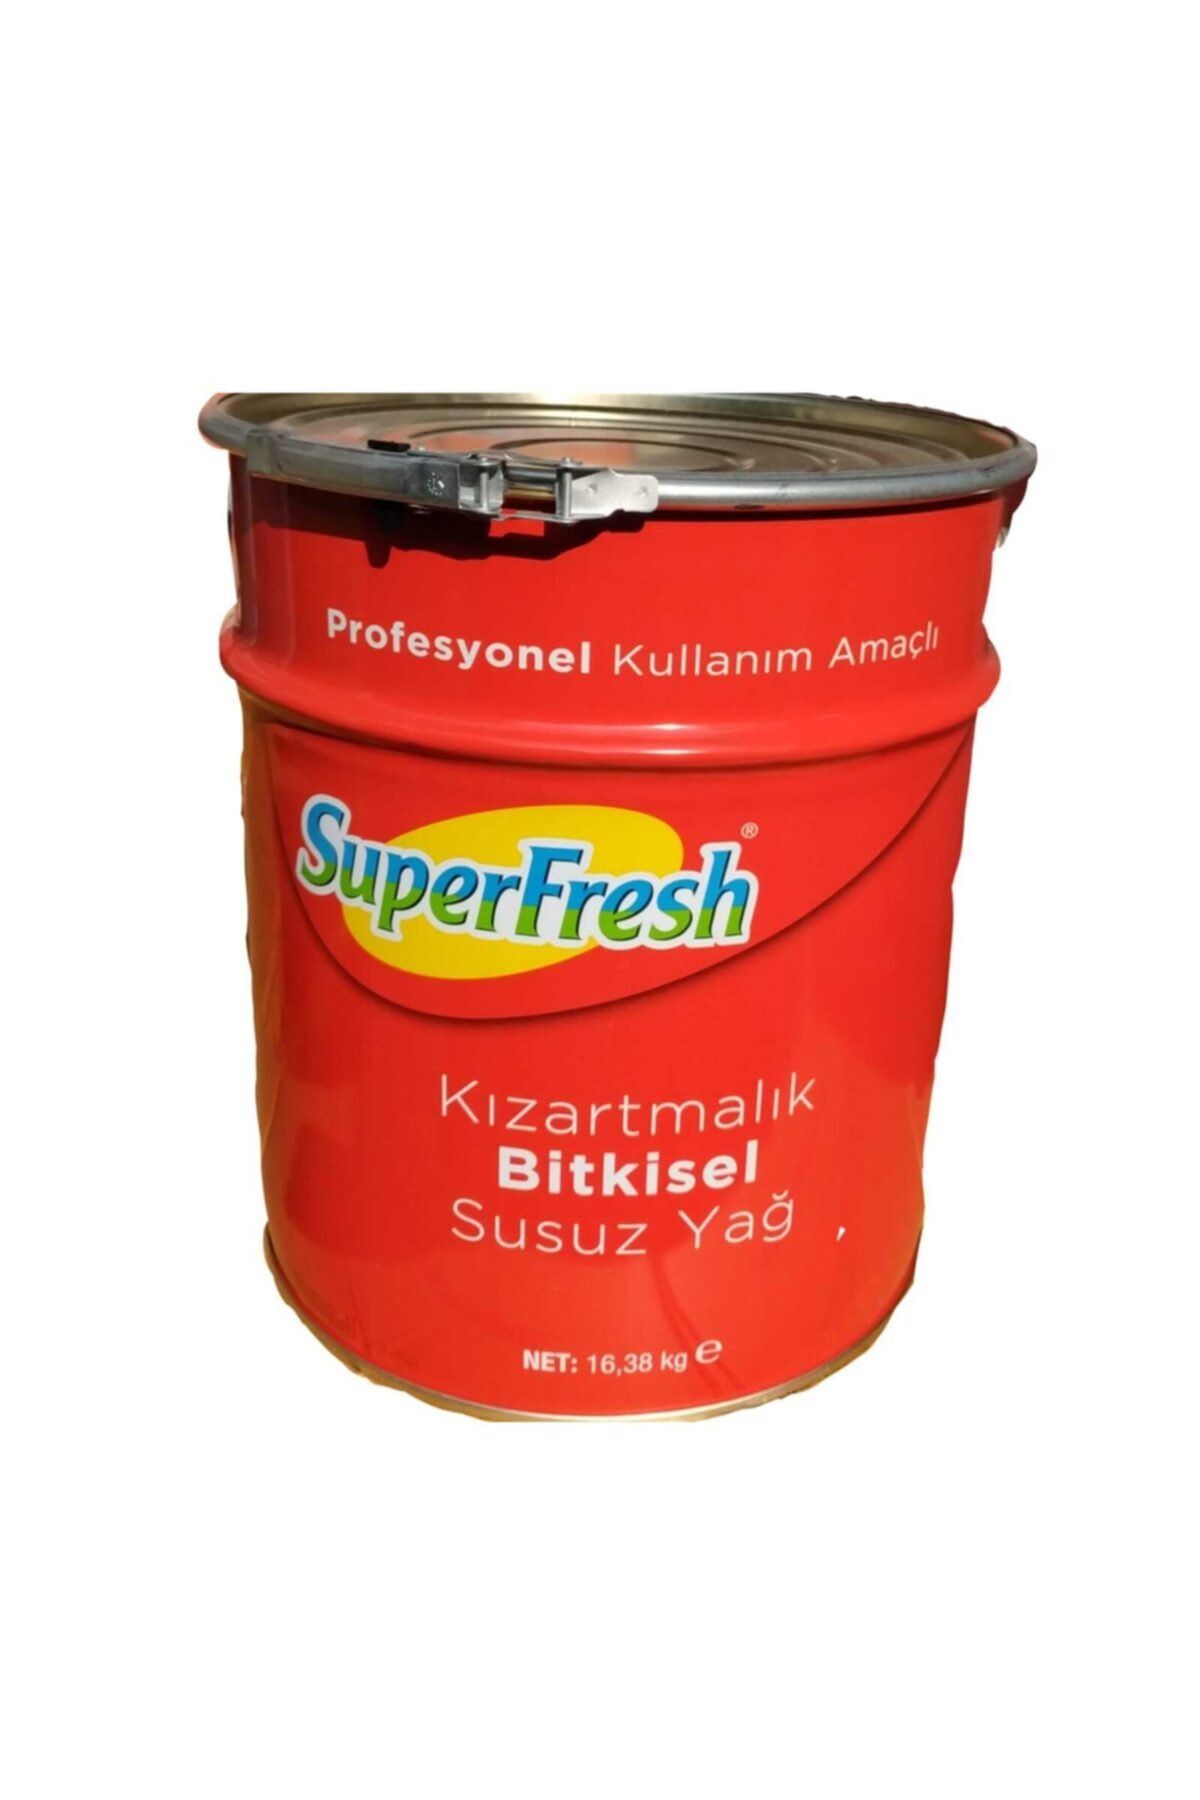 SuperFresh Super Fresh Kızartmalık Bitkisel Susuz Yağ 16,38 Kg(18 Lt)